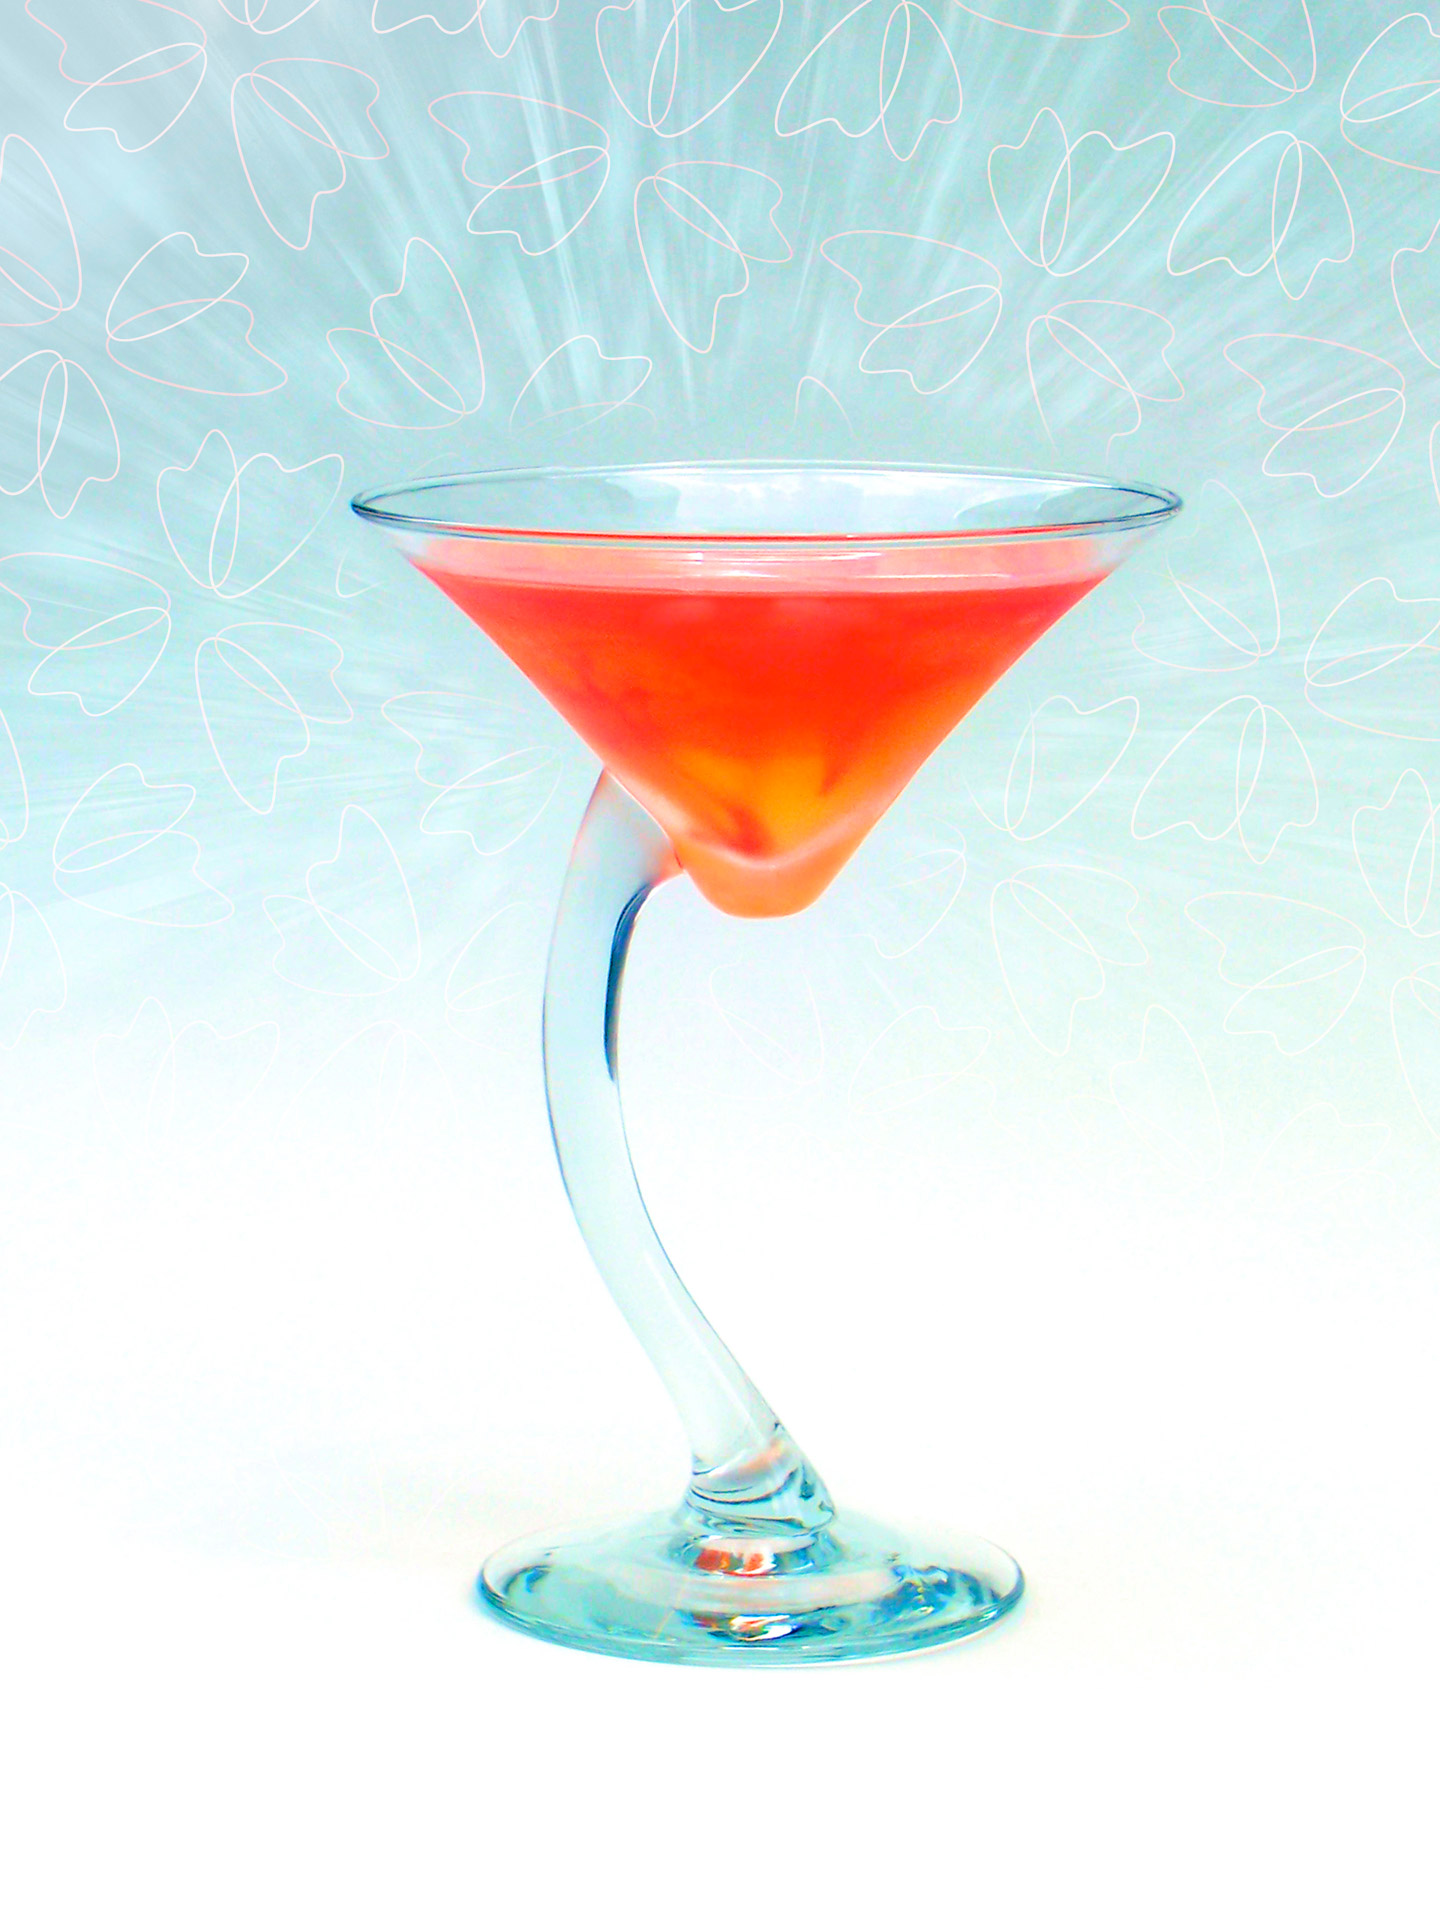 Martini with a retro background